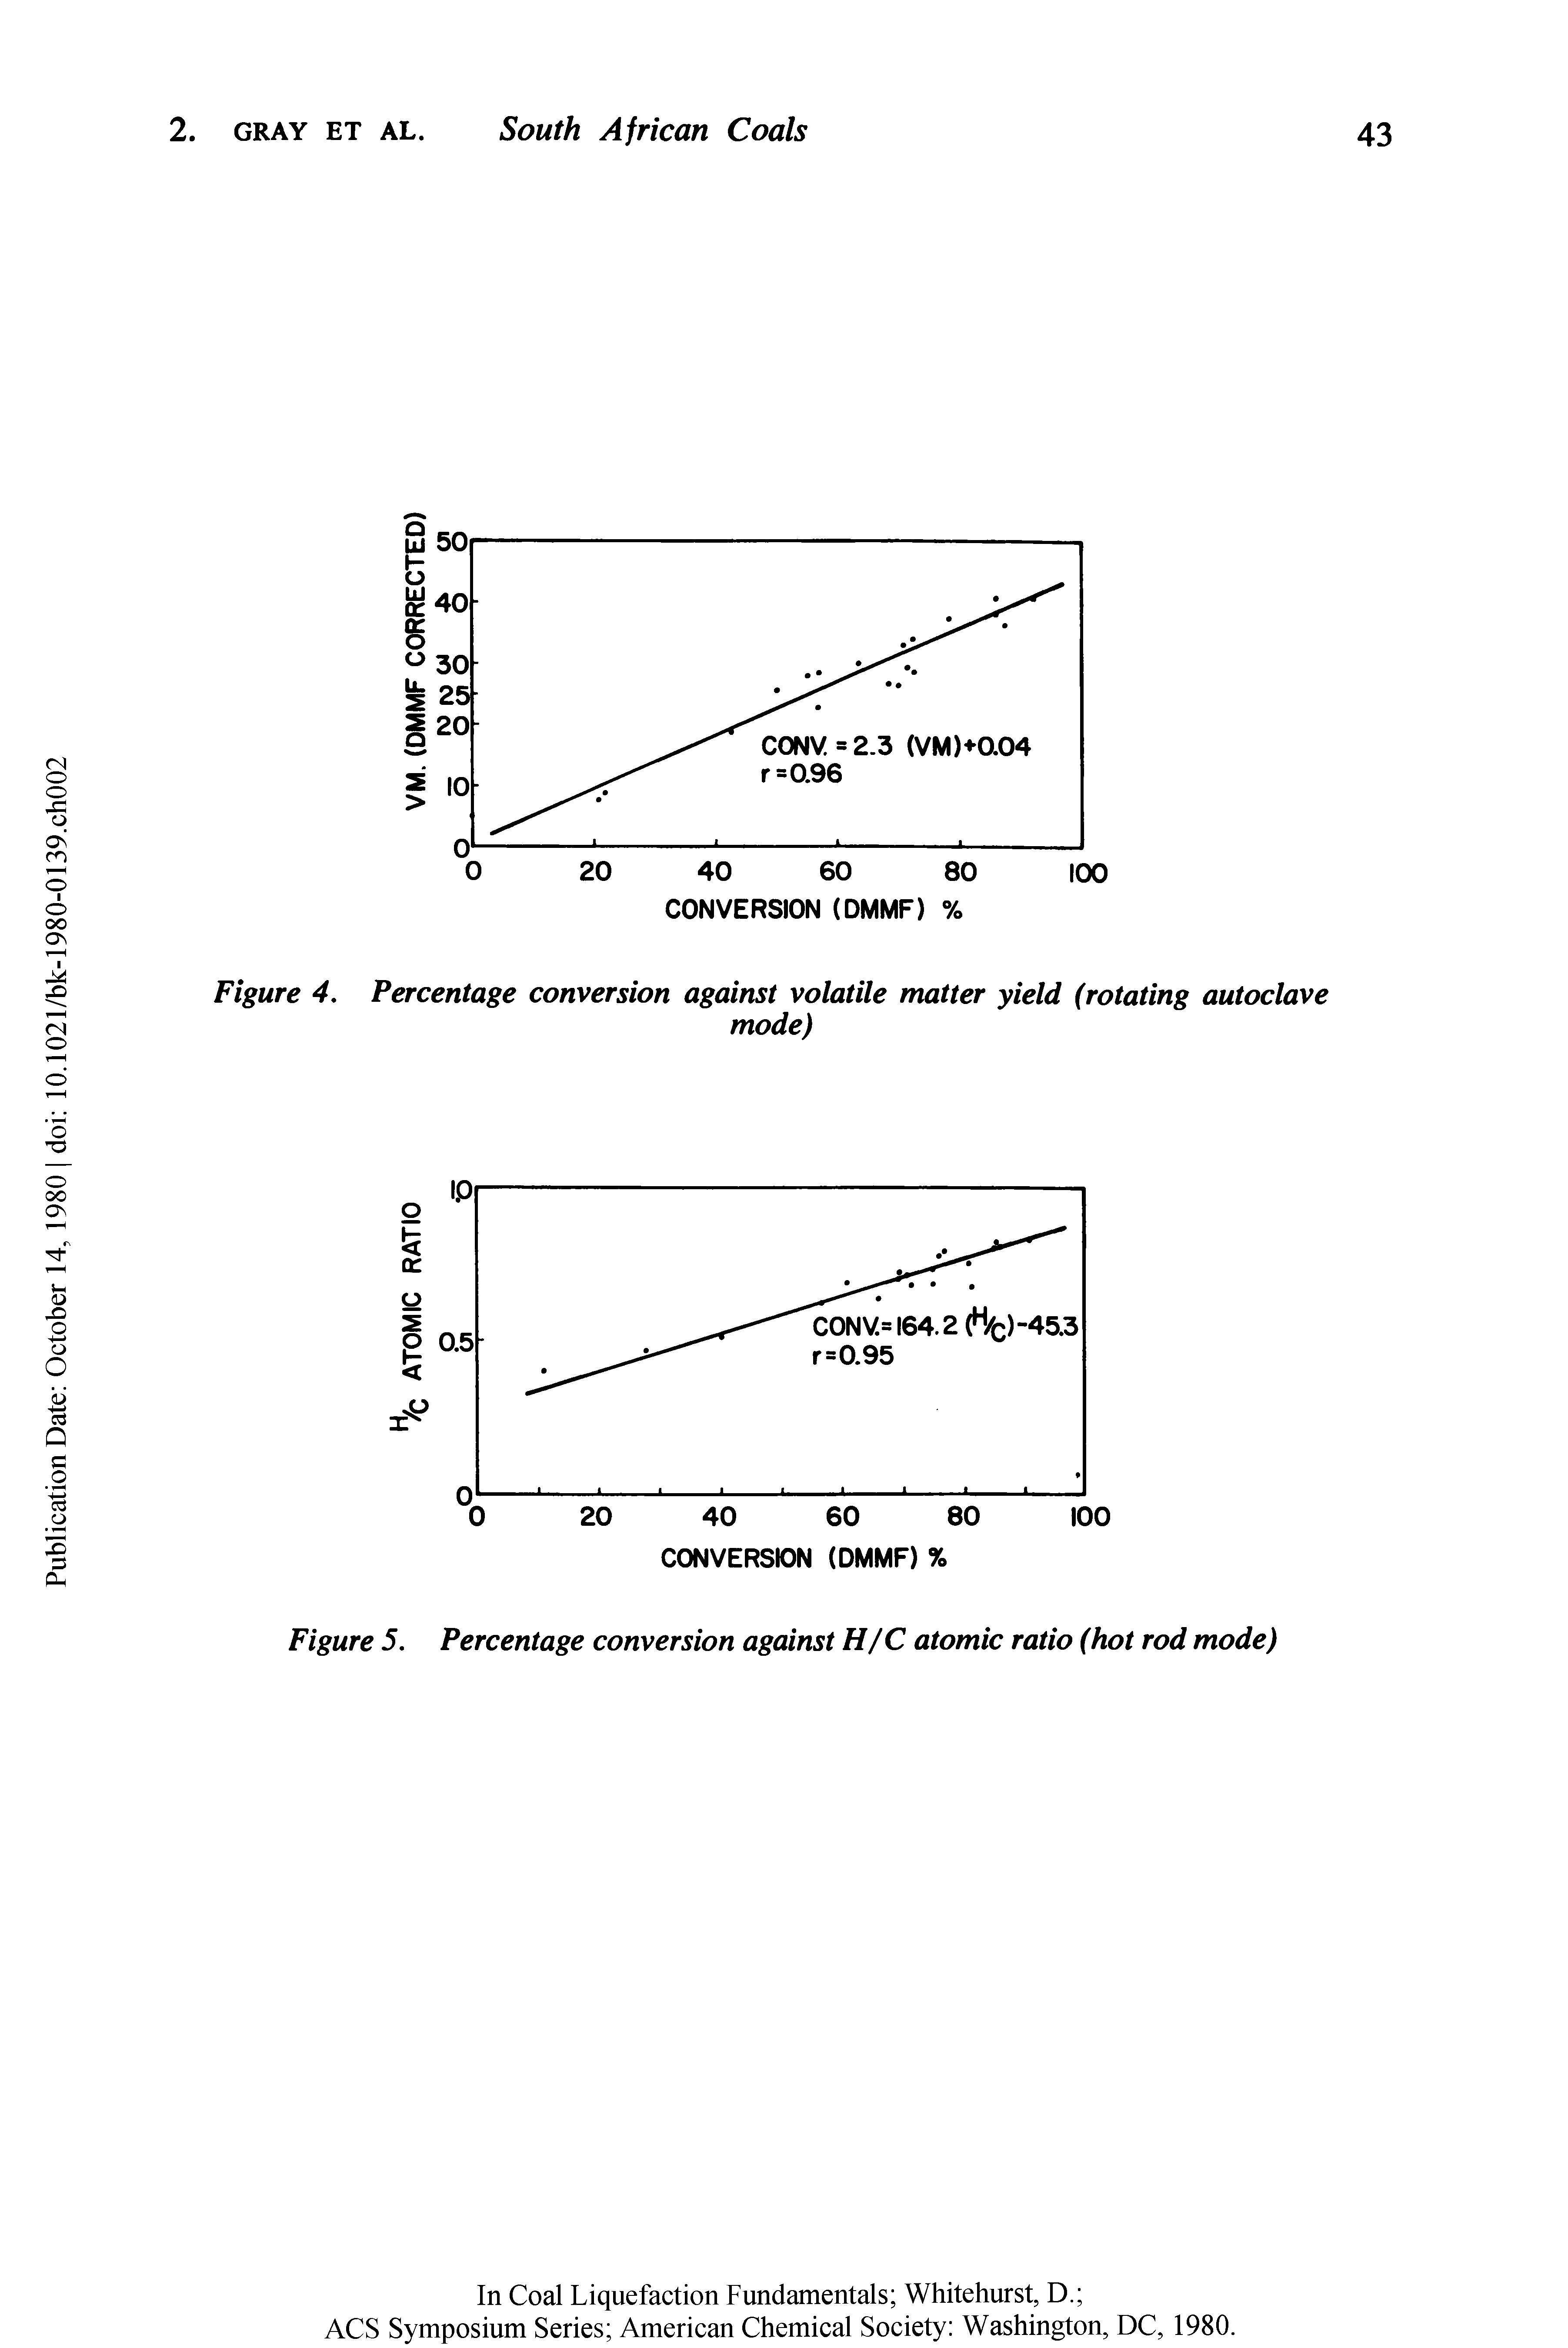 Figure 5. Percentage conversion against H/C atomic ratio (hot rod mode)...